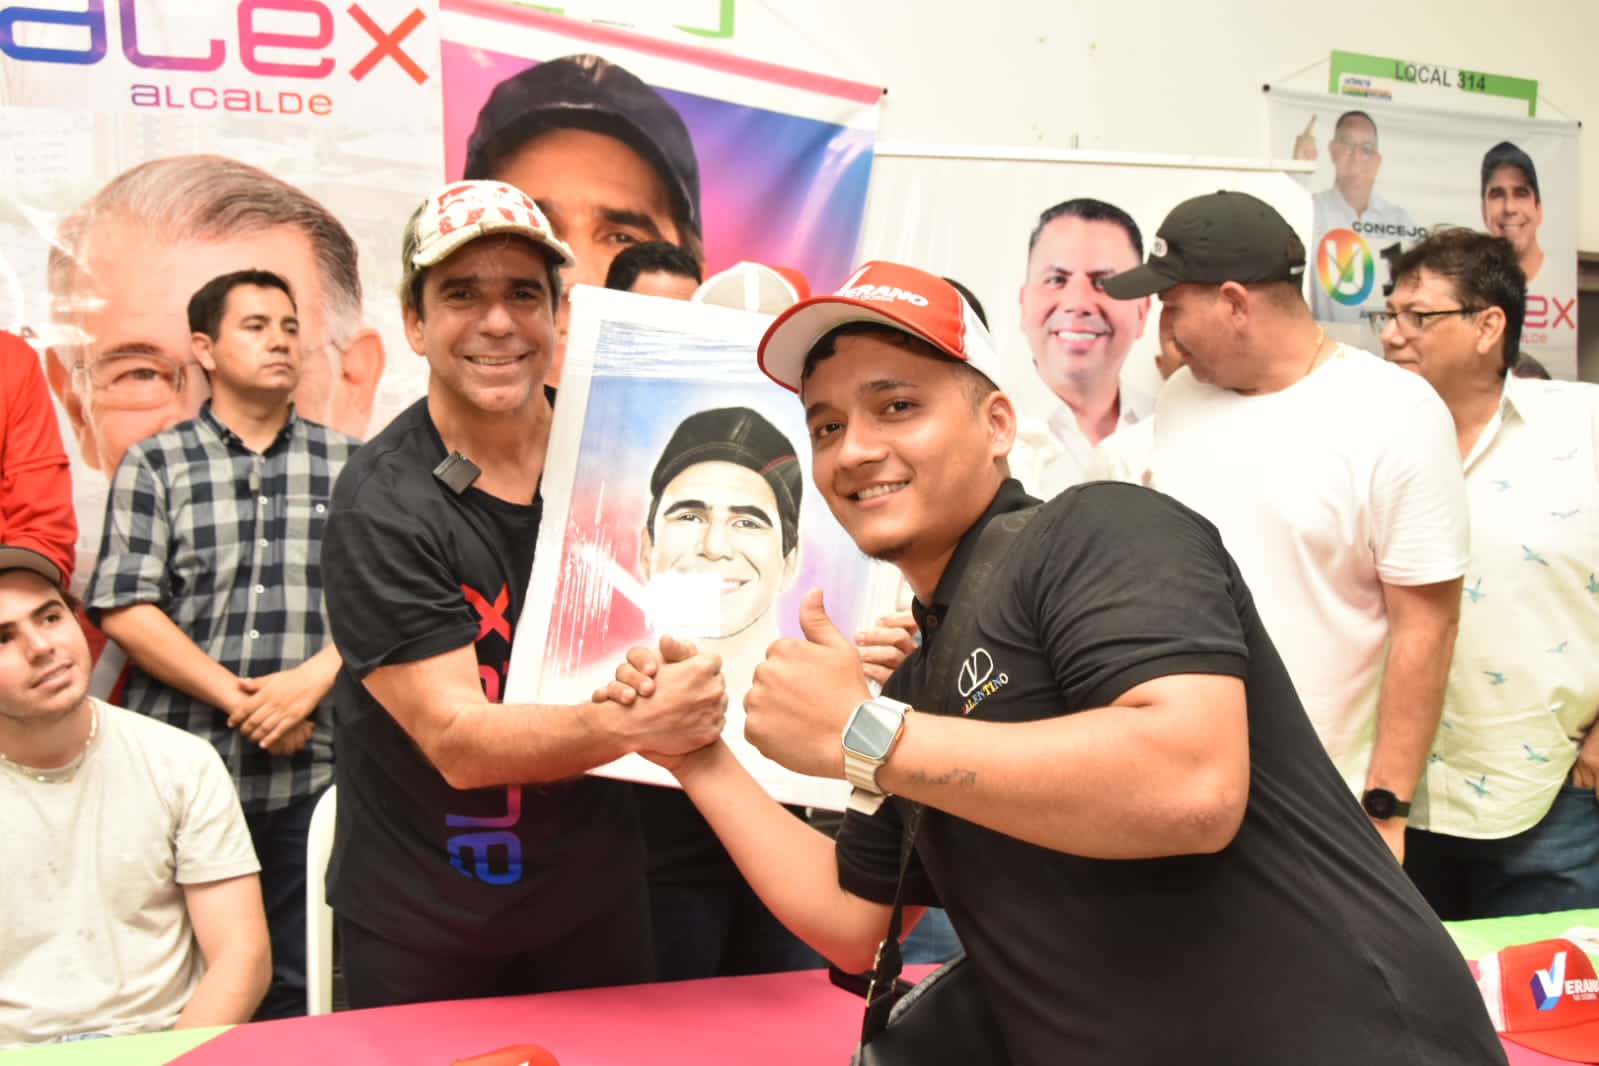 El candidato a la Alcaldía de Barranquilla, Alex Char.